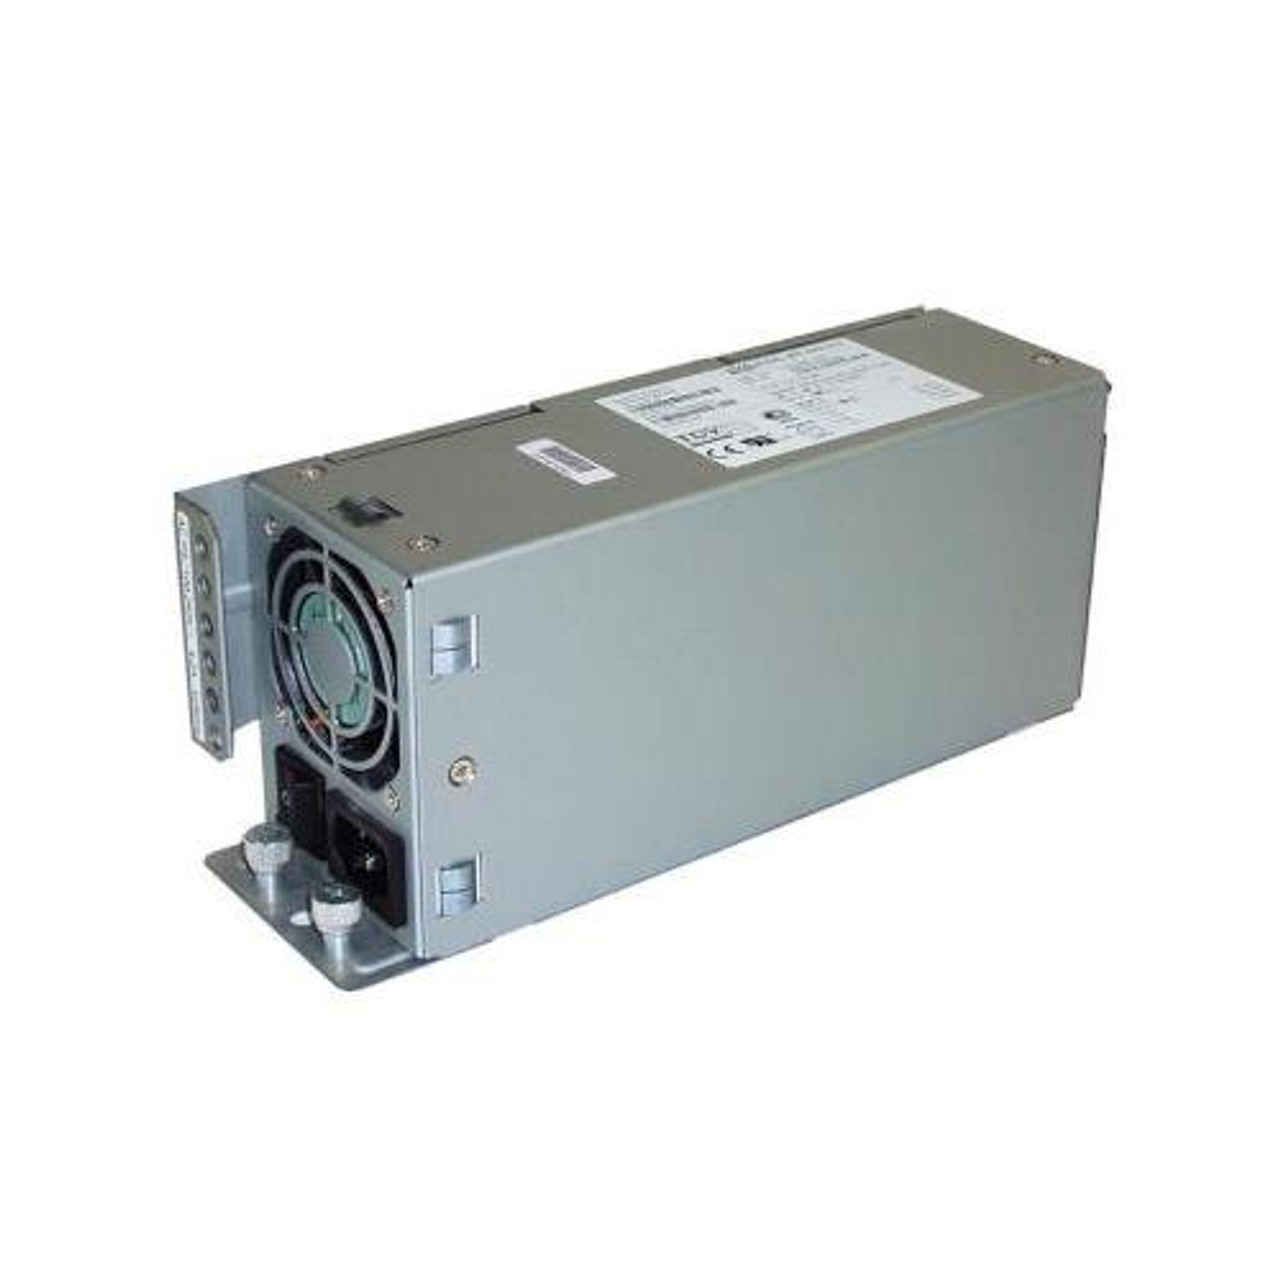 PWR-3660-AC Cisco 3660 Series Power Supply 